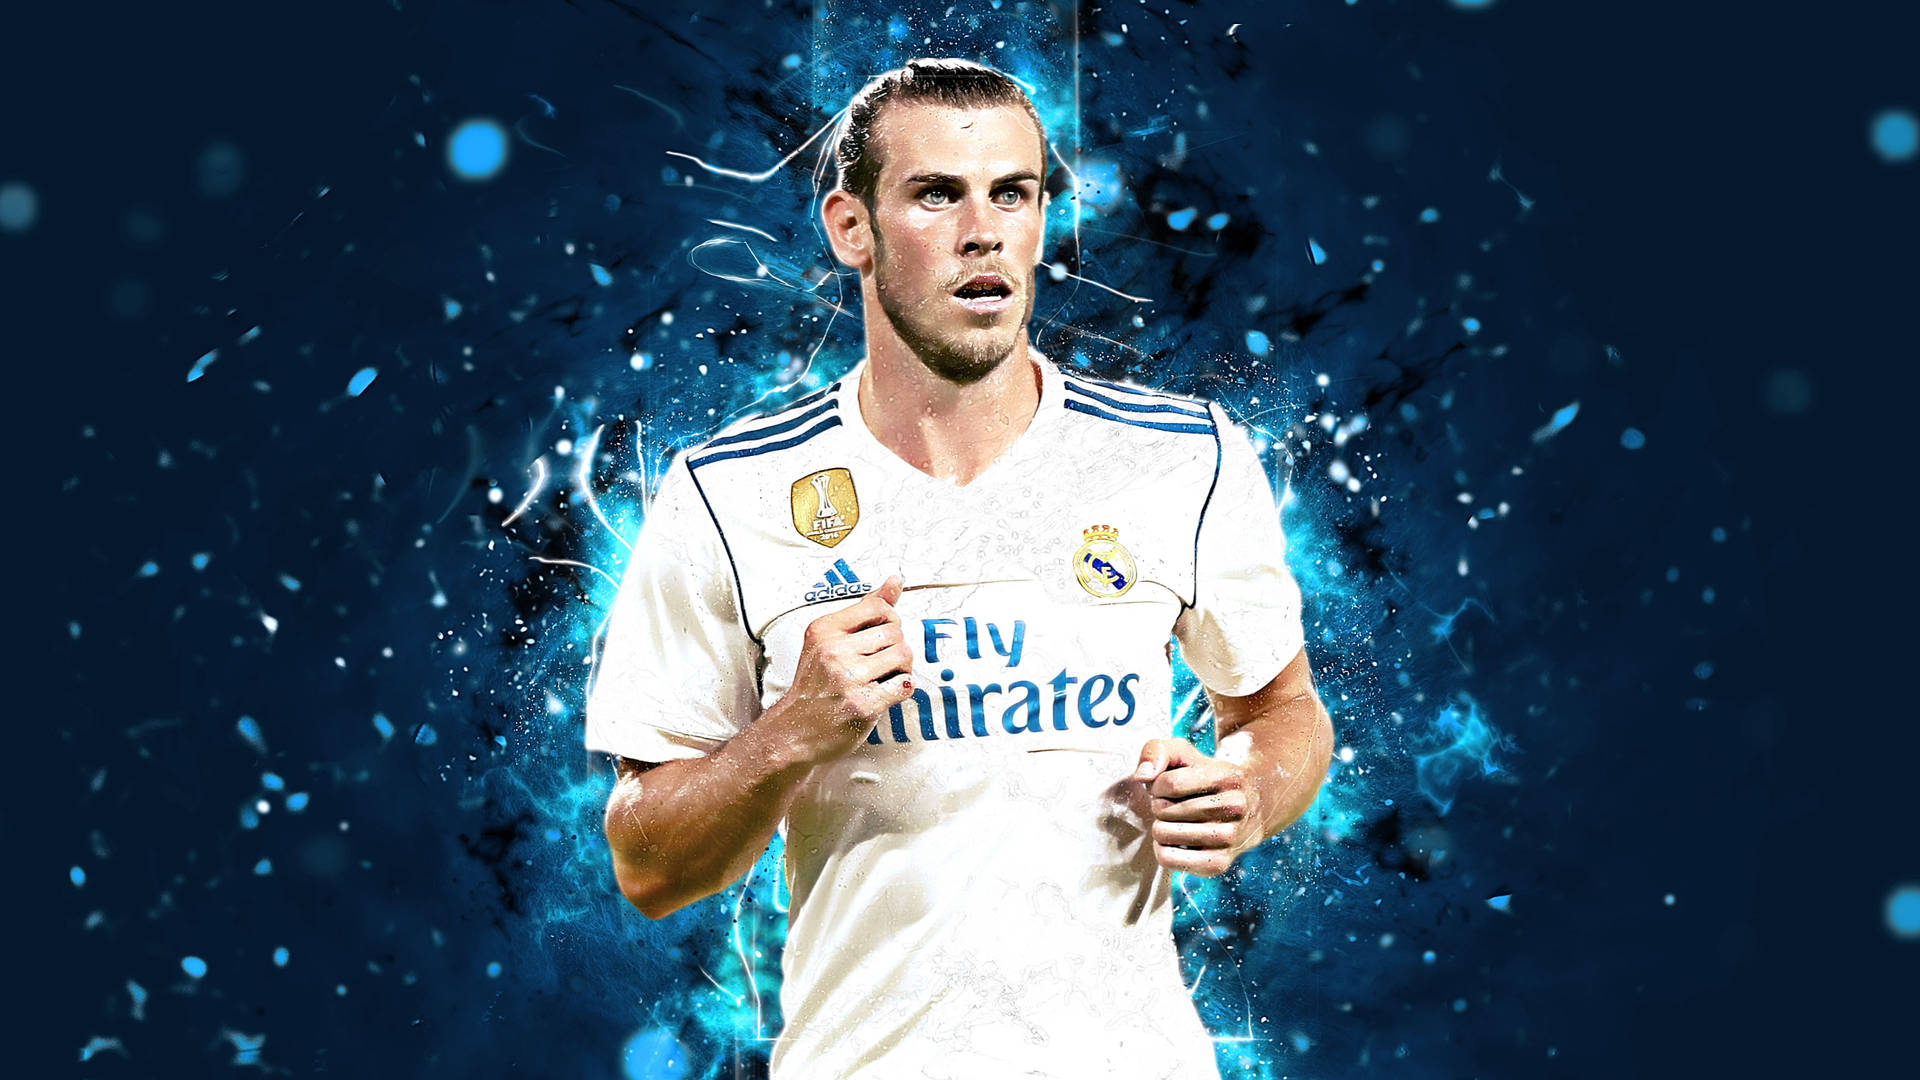 Gareth Bale In Digital Blue Background